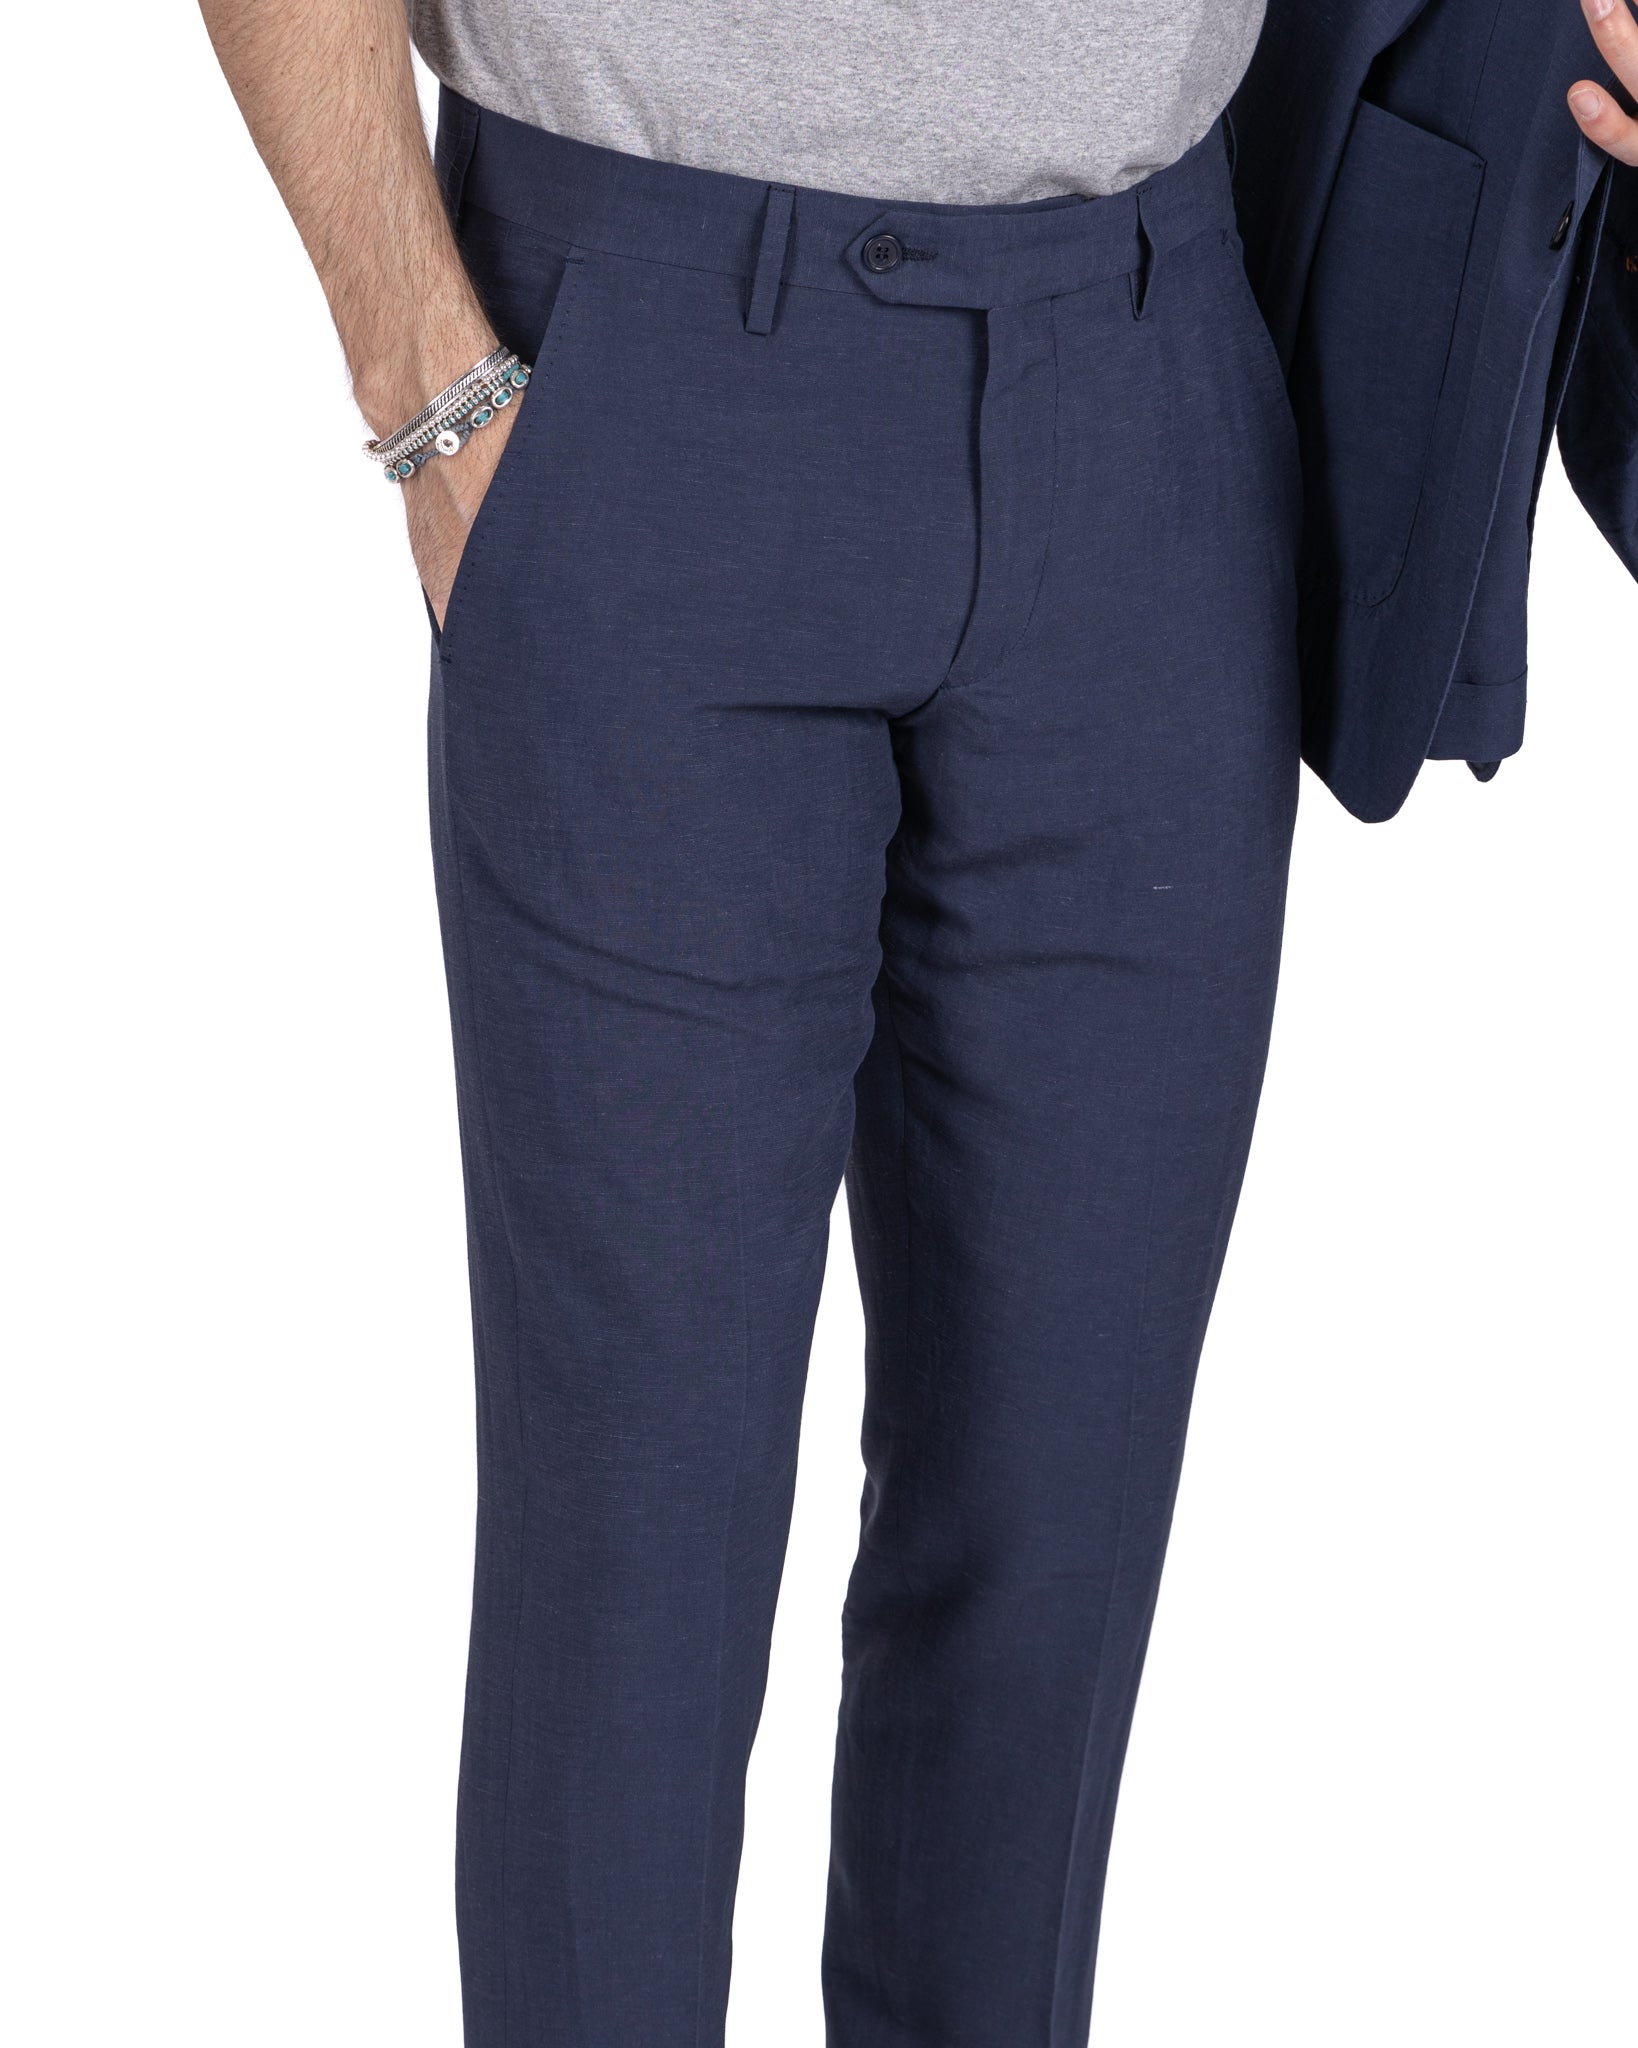 Ventotene - blue single-breasted linen suit